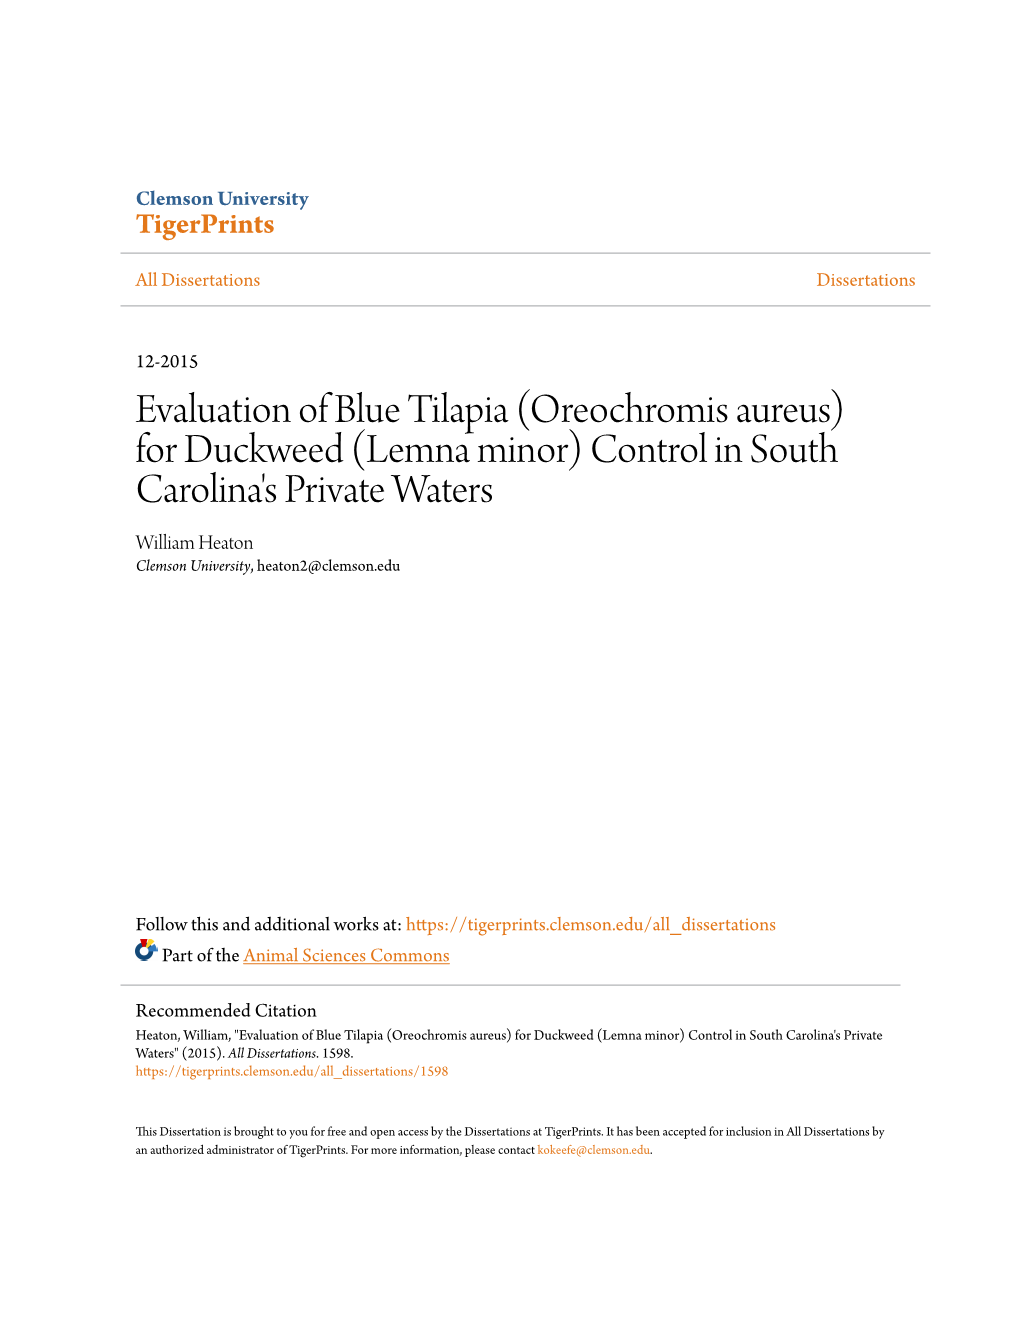 Evaluation of Blue Tilapia (Oreochromis Aureus) for Duckweed